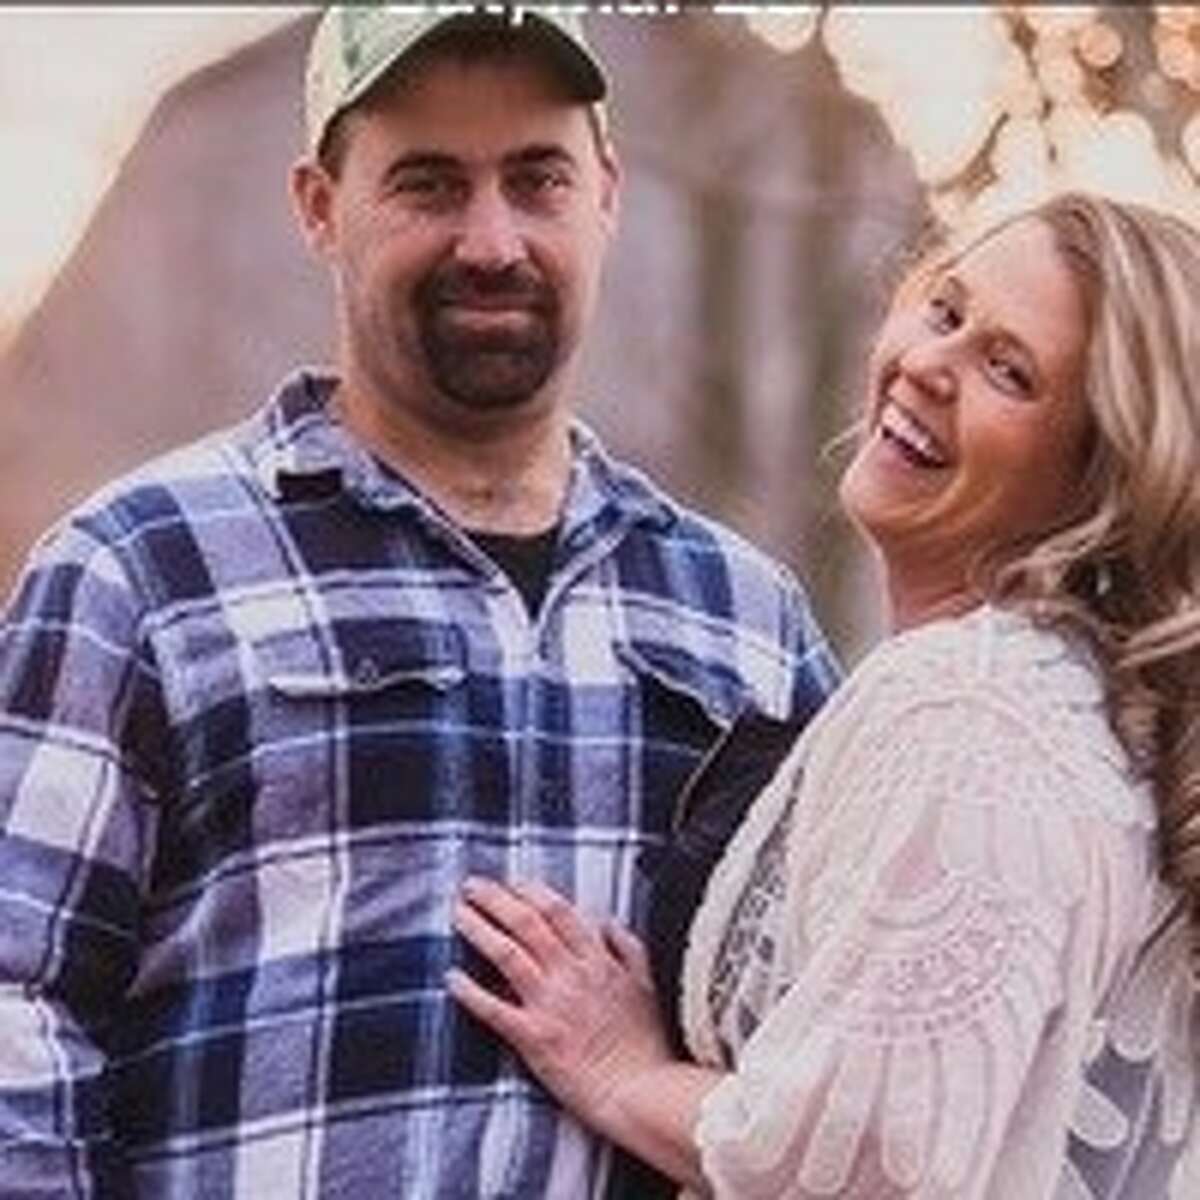 Ball of sunshine': Family describes girl, 3, killed in wreck